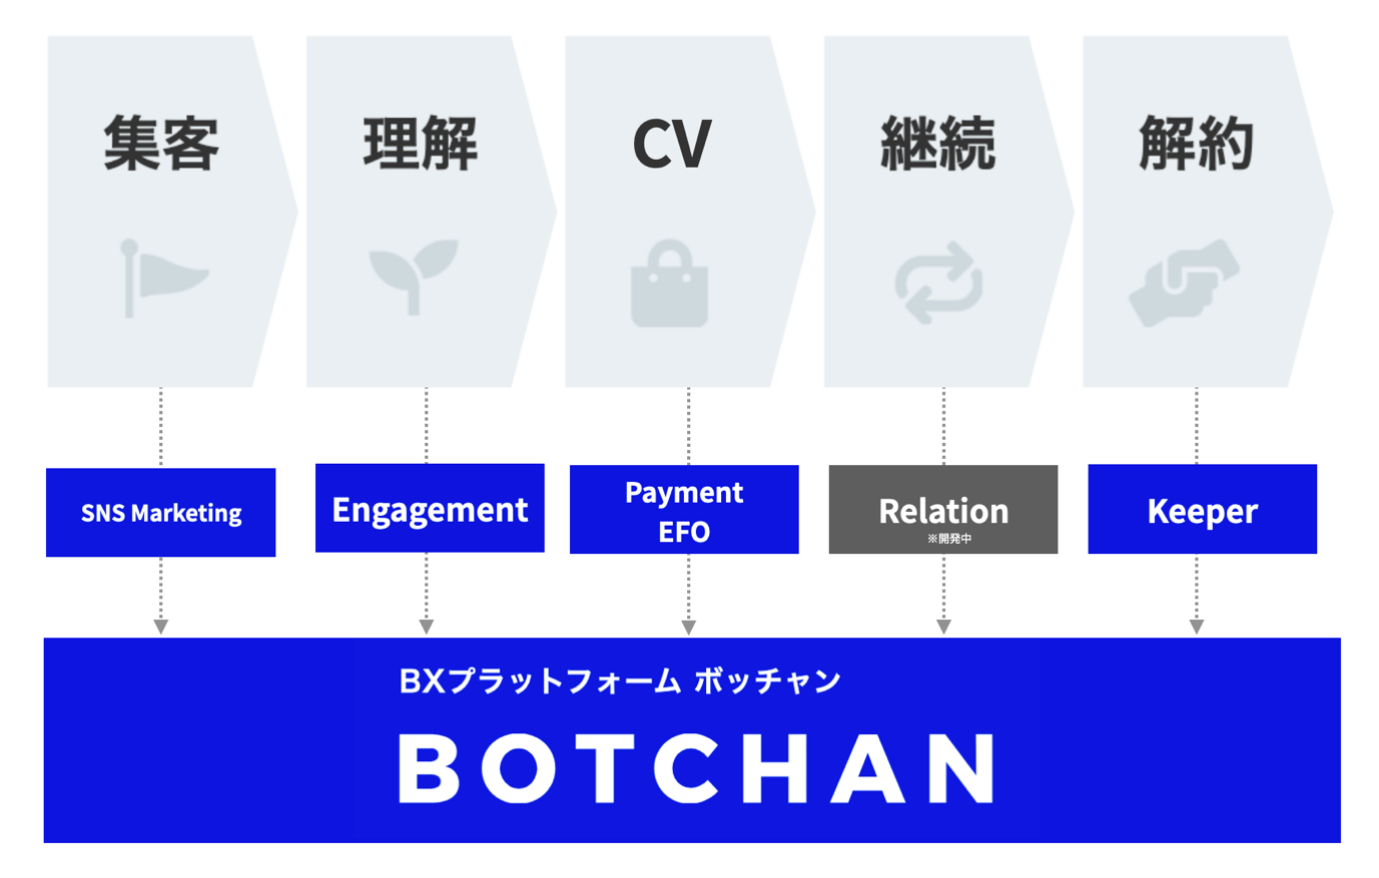 LTVの最大化をブランド体験の向上を通して実現する「BOTCHAN」